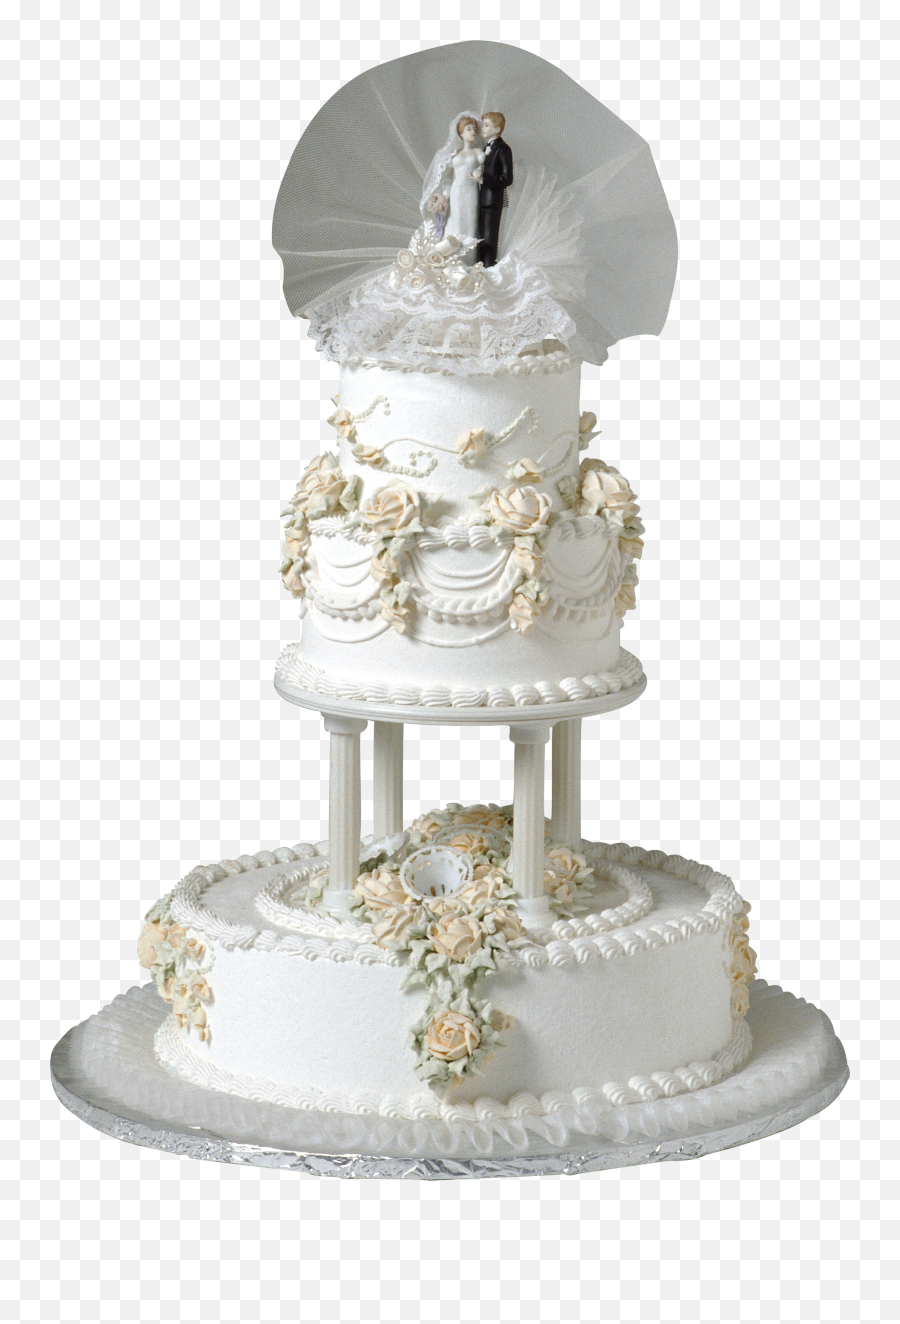 Wedding Cake Png Images